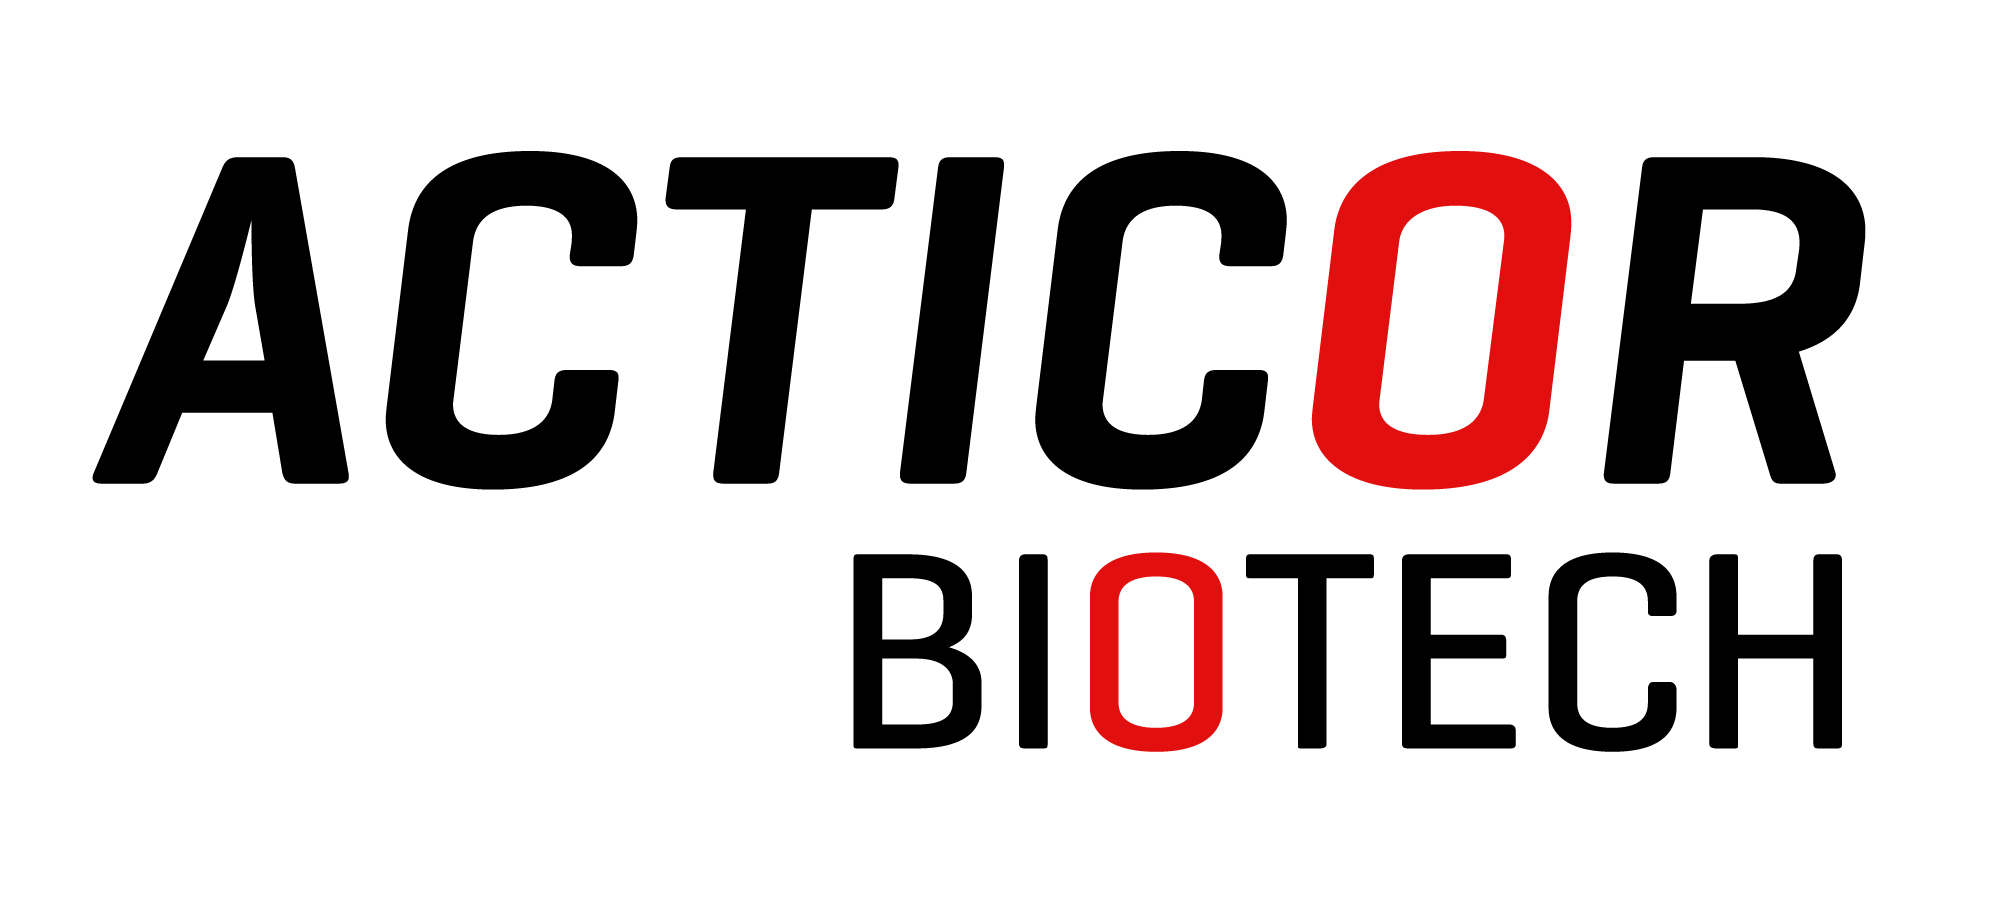 Acticor biotech